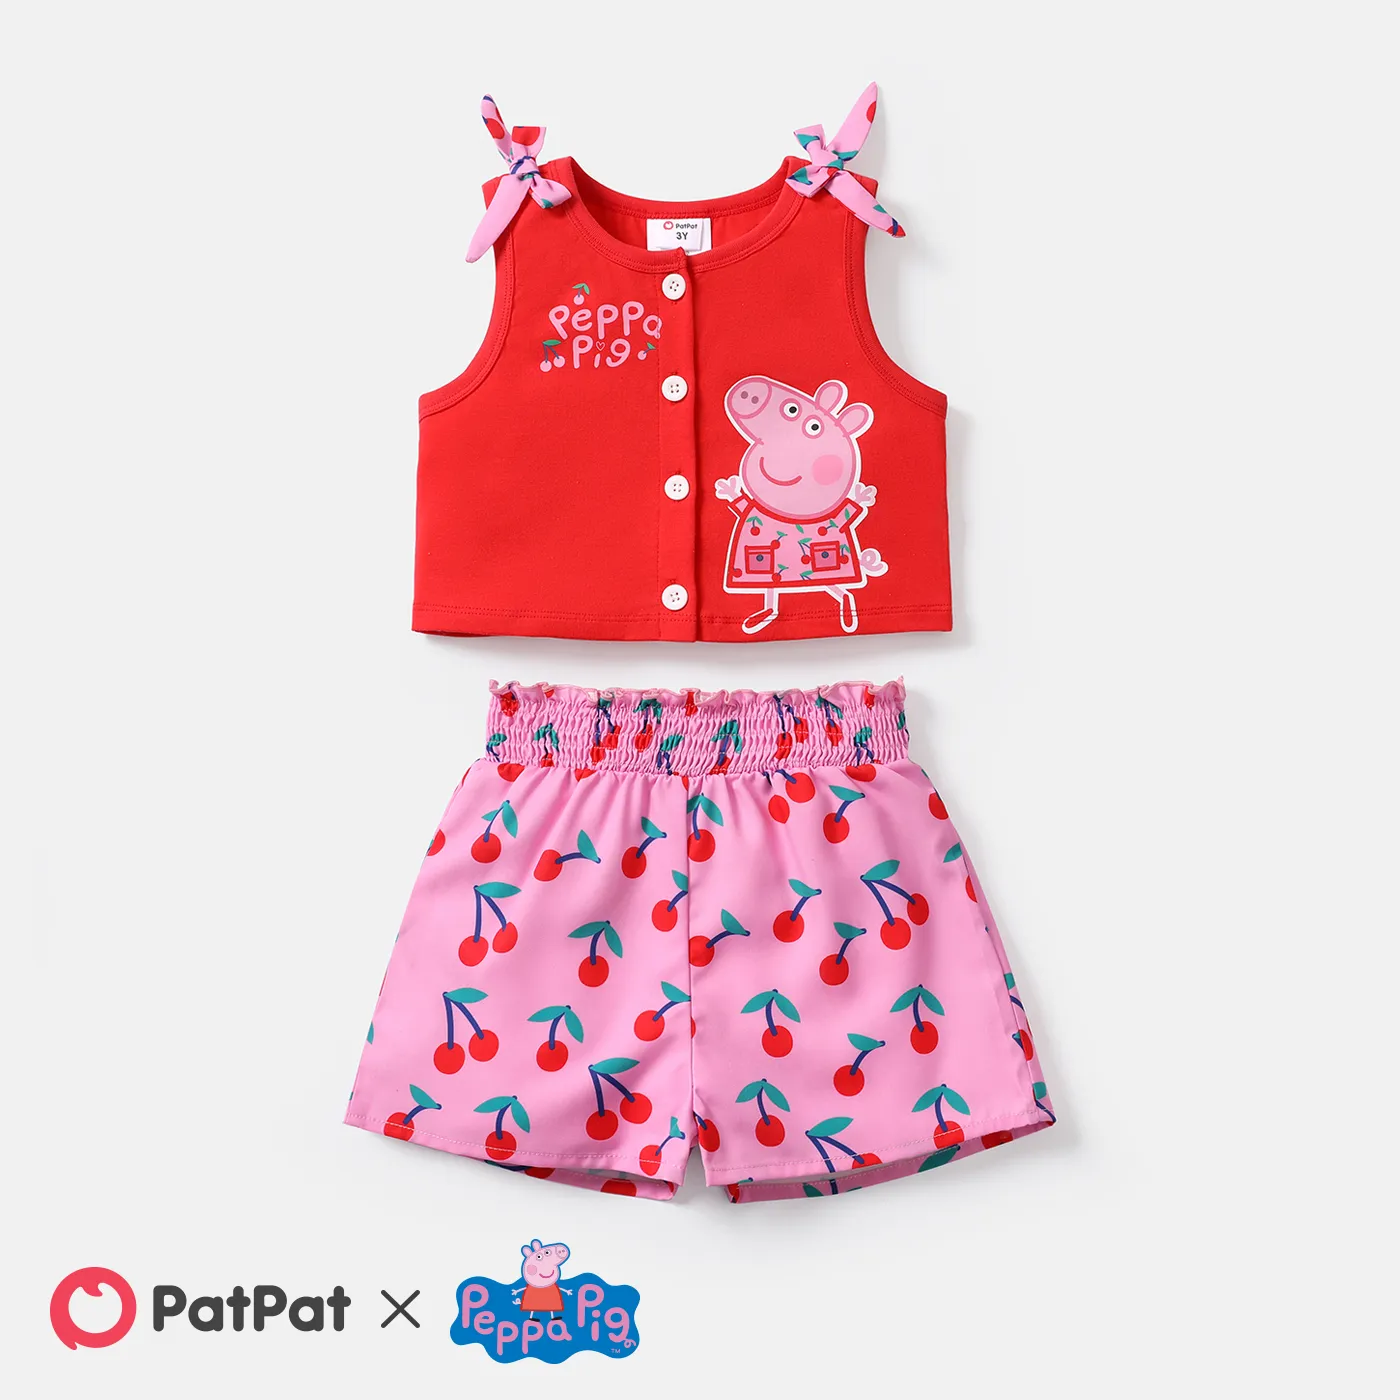 

Peppa Pig 2pcs Toddler Girl Bowknot Design Cotton Tank Top and Cherry Print Shorts Set